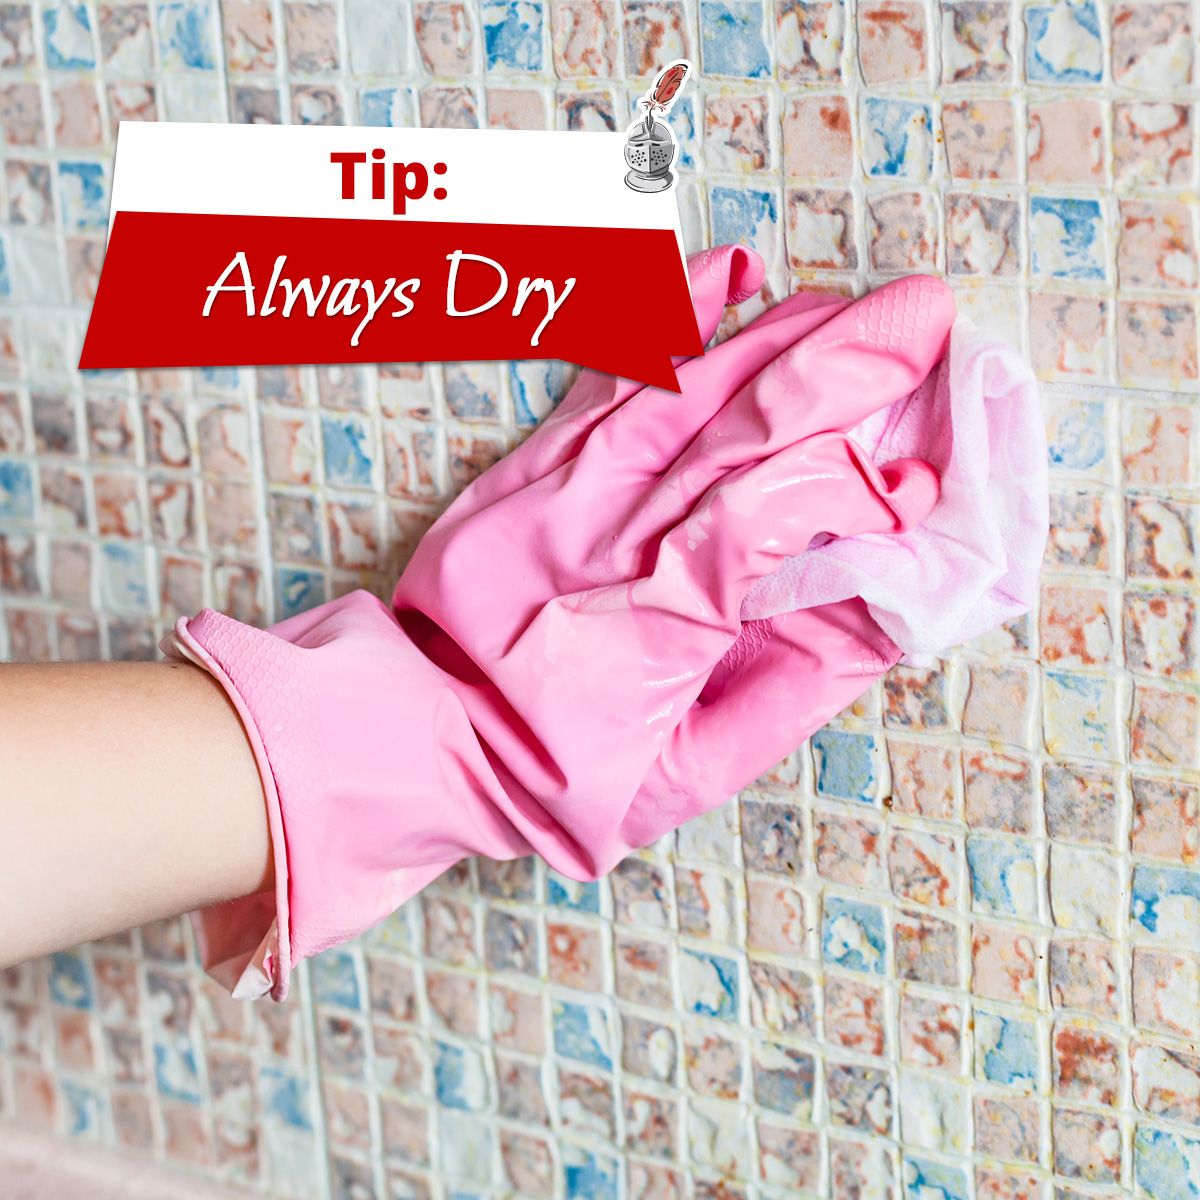 Tip: Always Dry